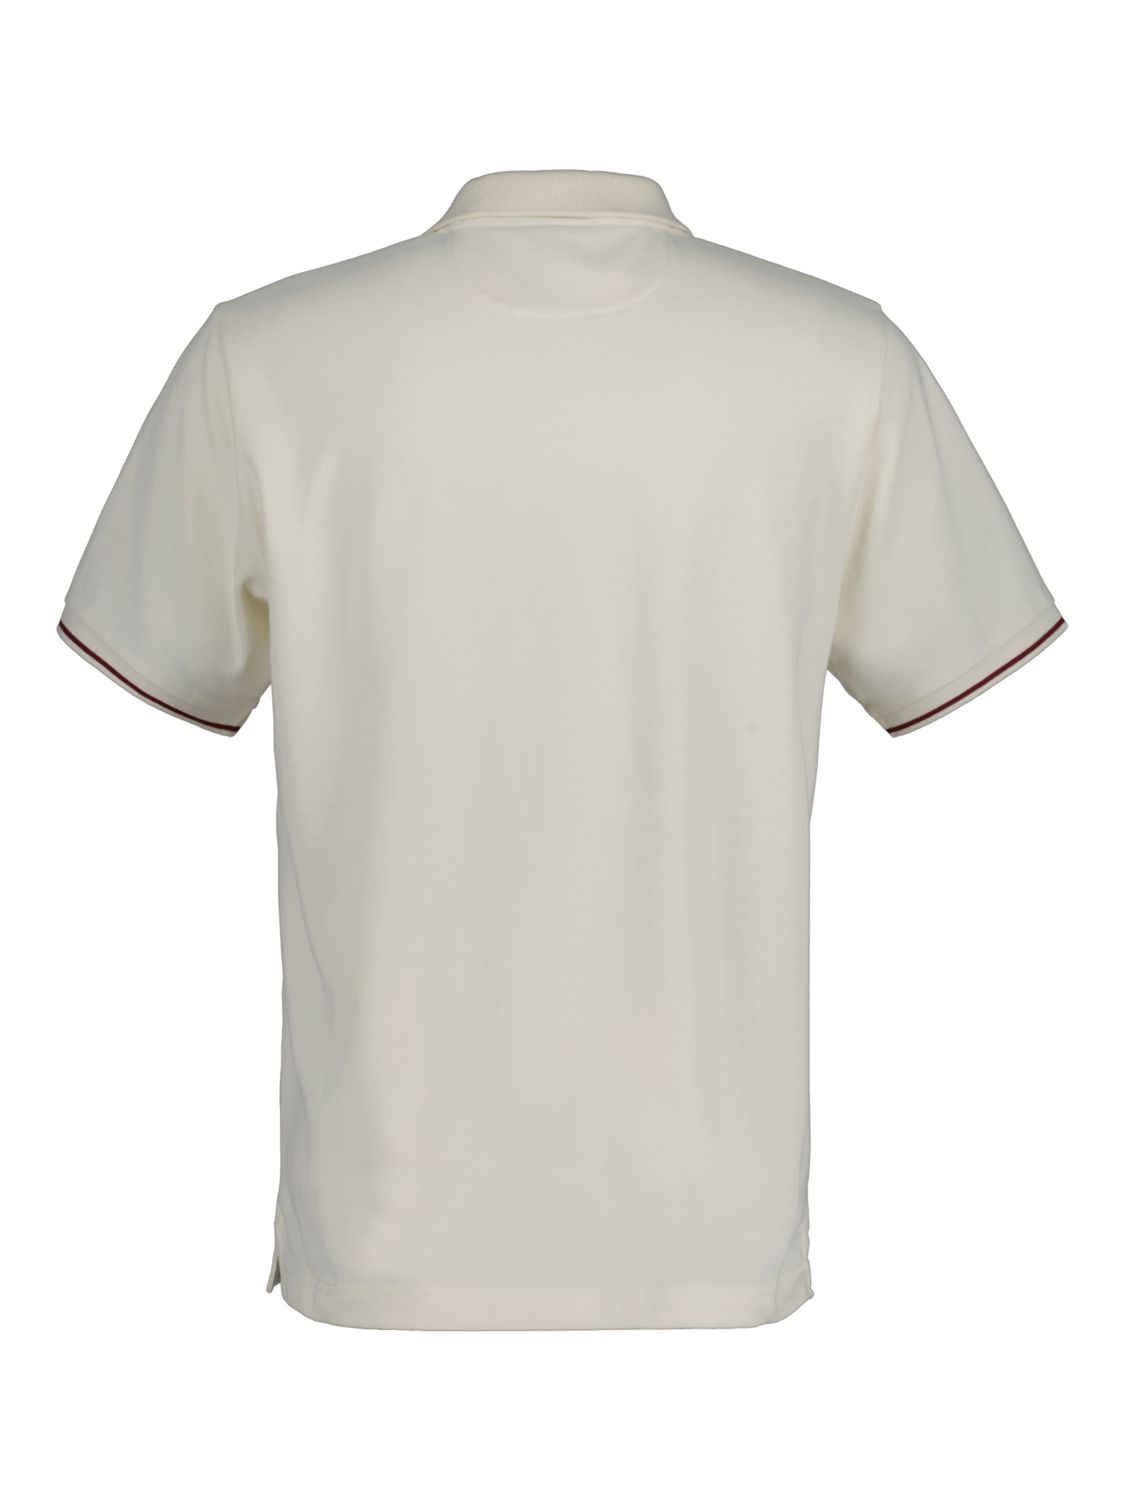 GANT Tipping Short Sleeve Rugger Polo Shirt, Cream, XL